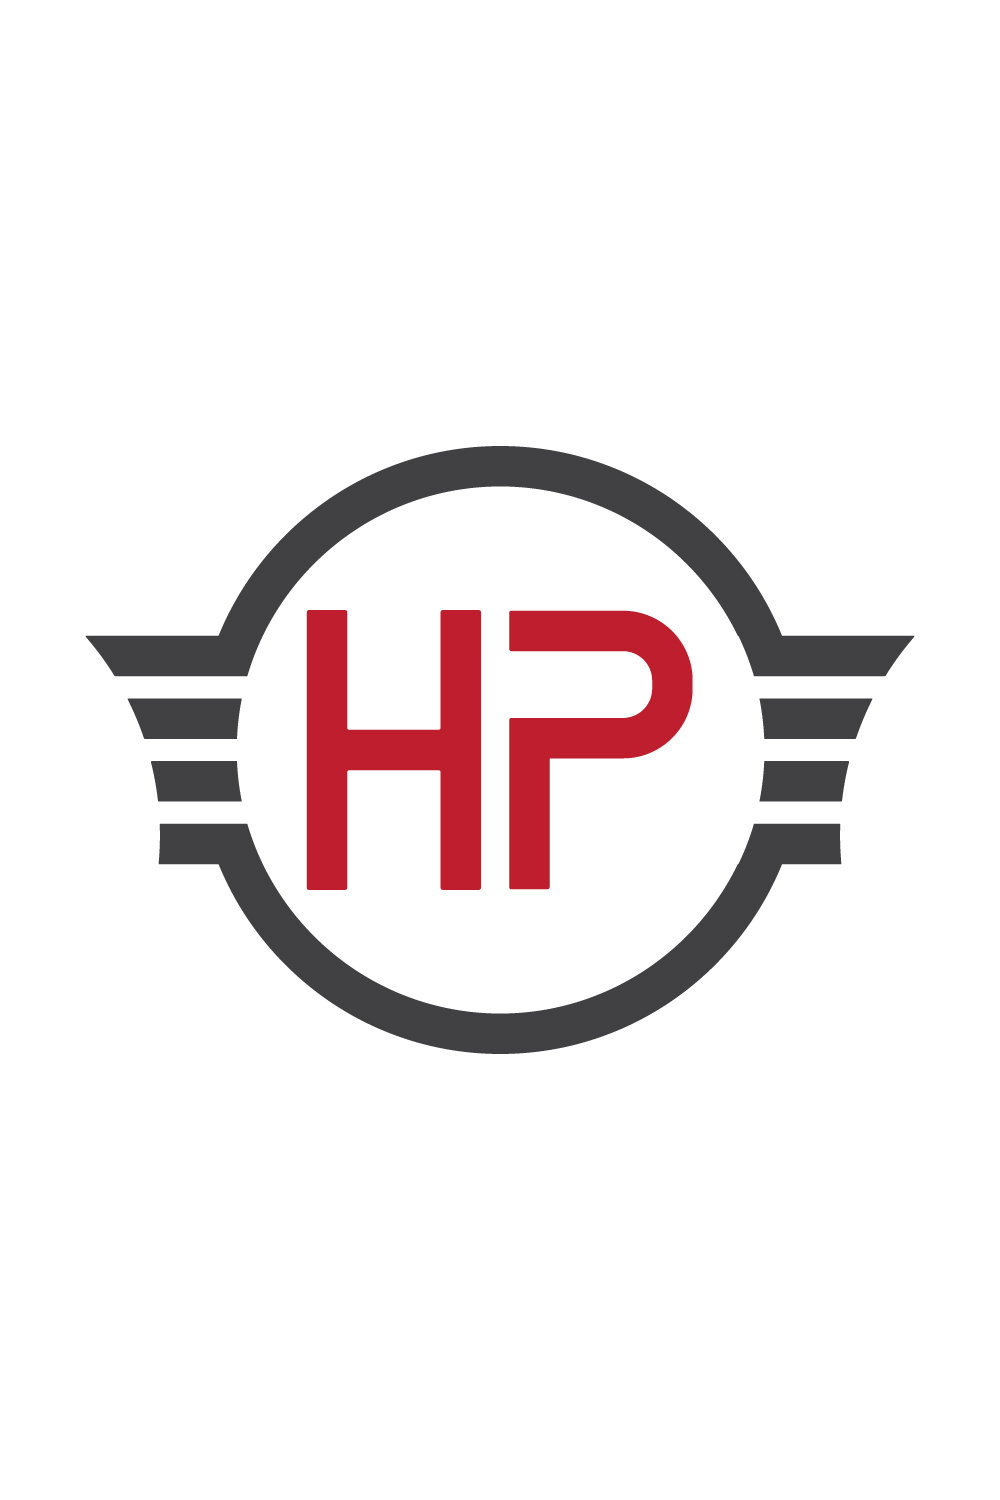 HP letters logo design vector images HP logo monogram best identity pinterest preview image.